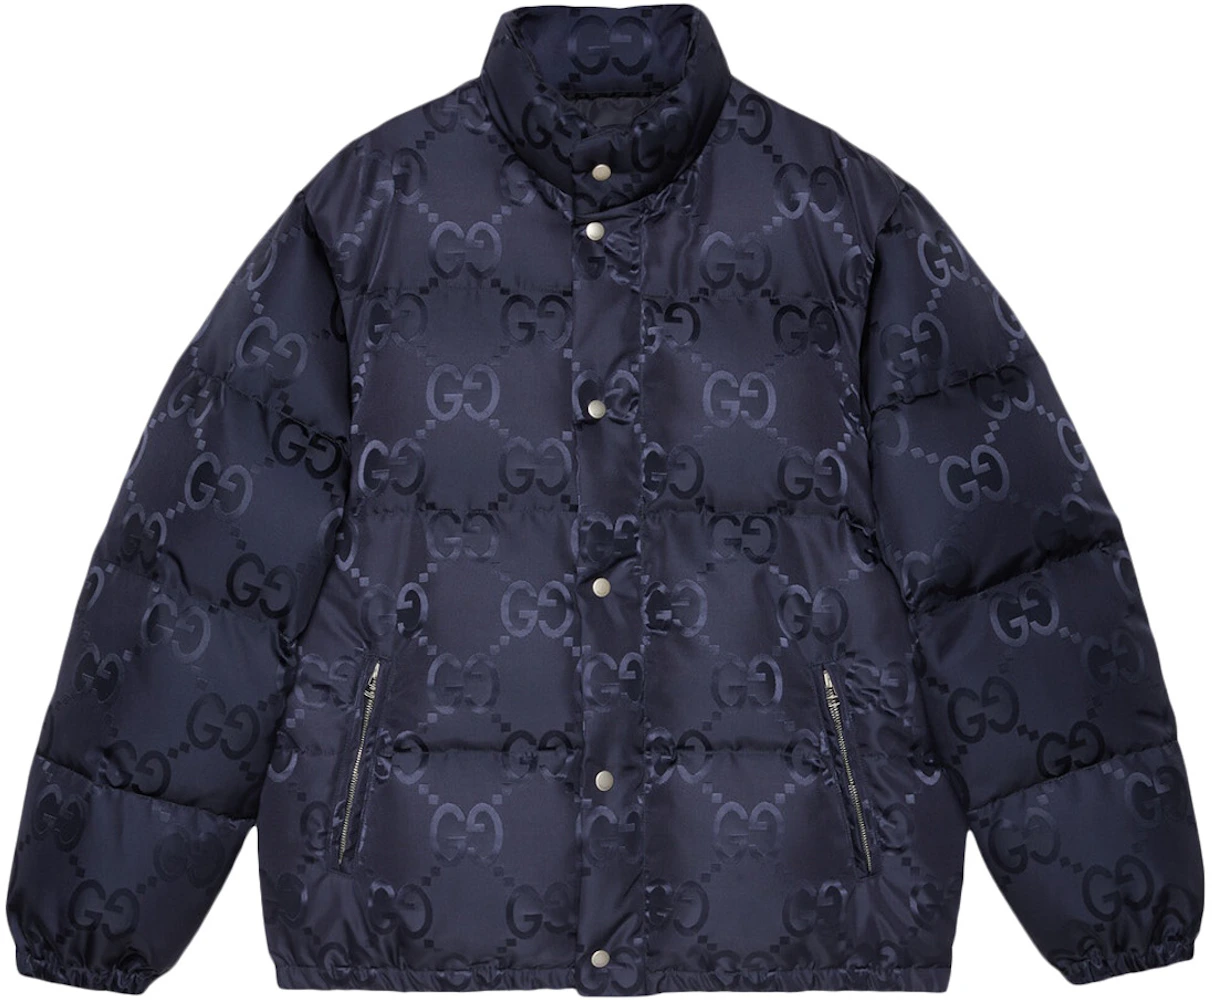 Dark Blue / Beige GG Jacquard Jacket